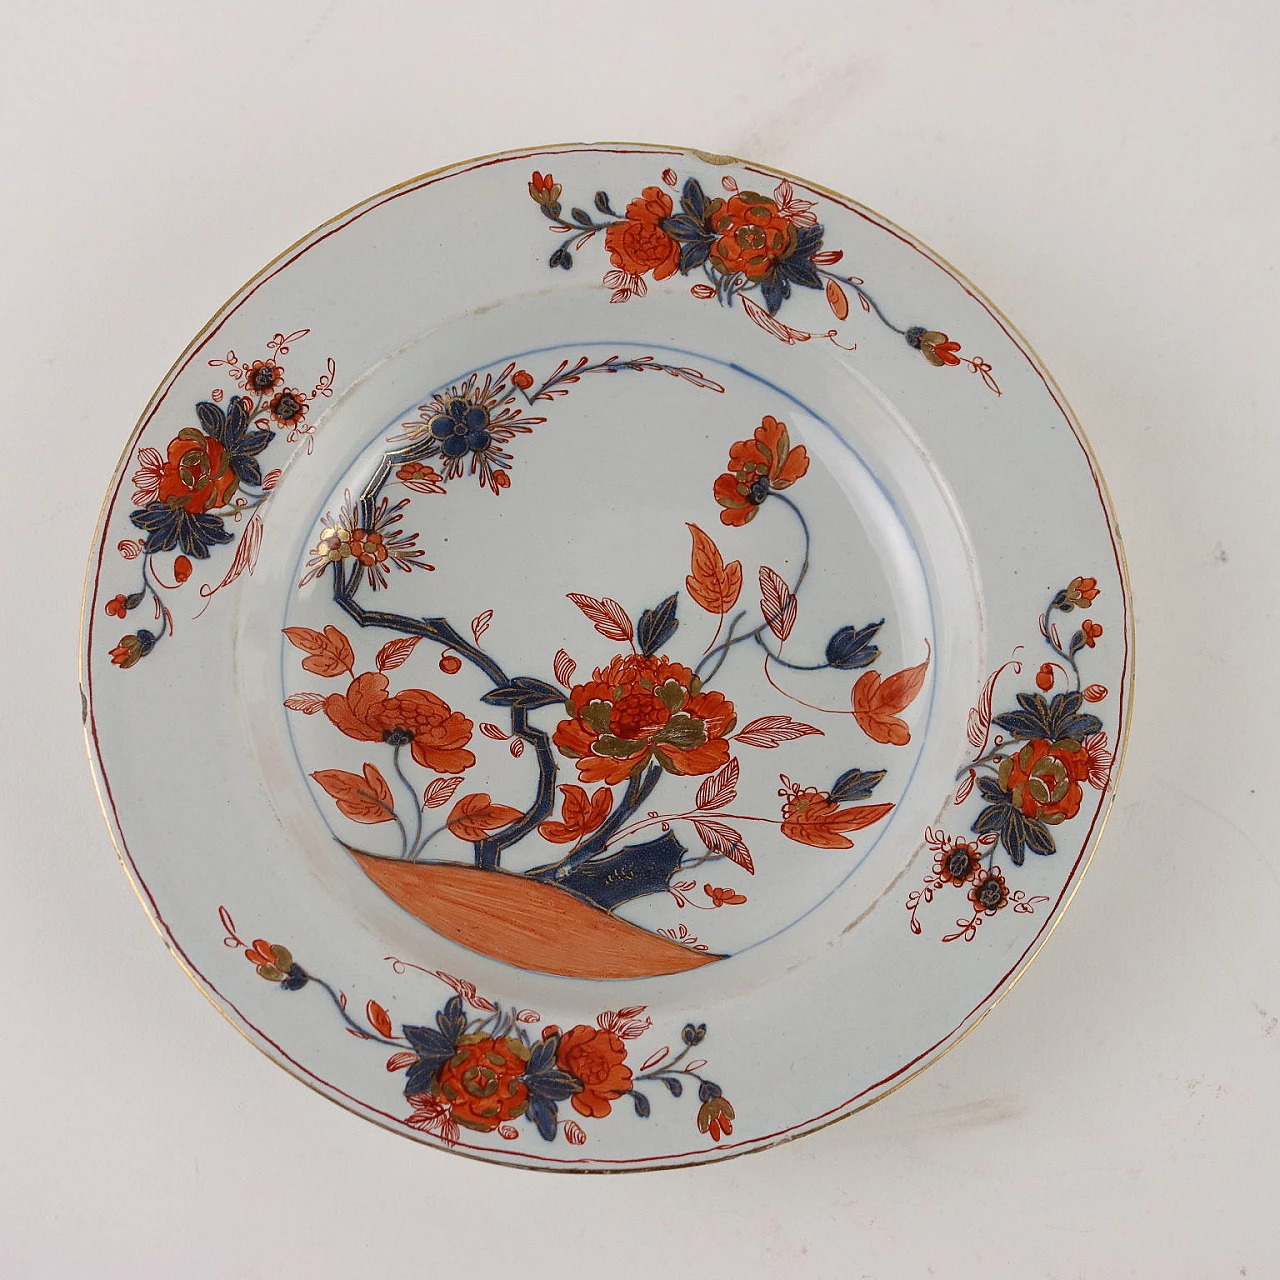 4 Polychrome majolica plates by Rubati, 18th century 3